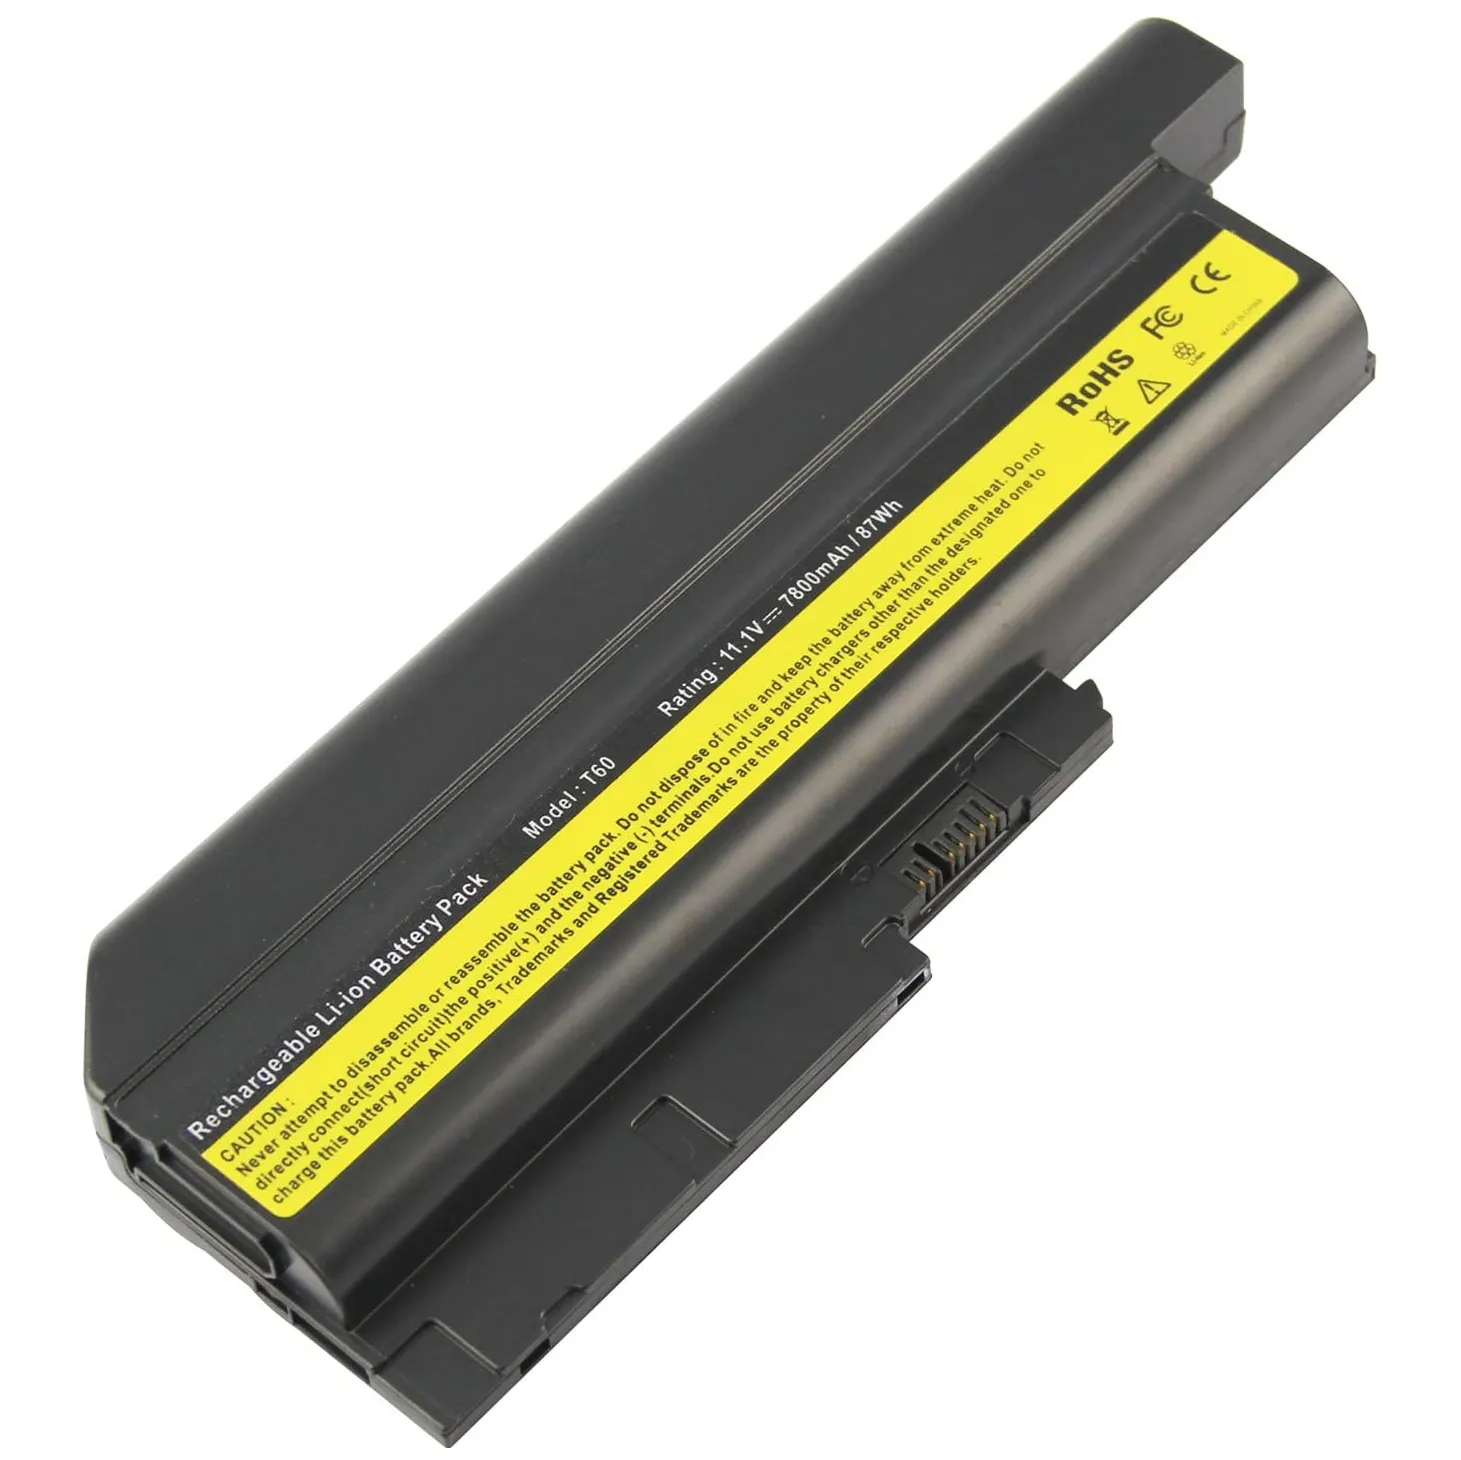 Original and OEM Battery for Lenovo IBM THINKPAD R60I R61 R61e R61i T61 T60 9 cell laptop battery